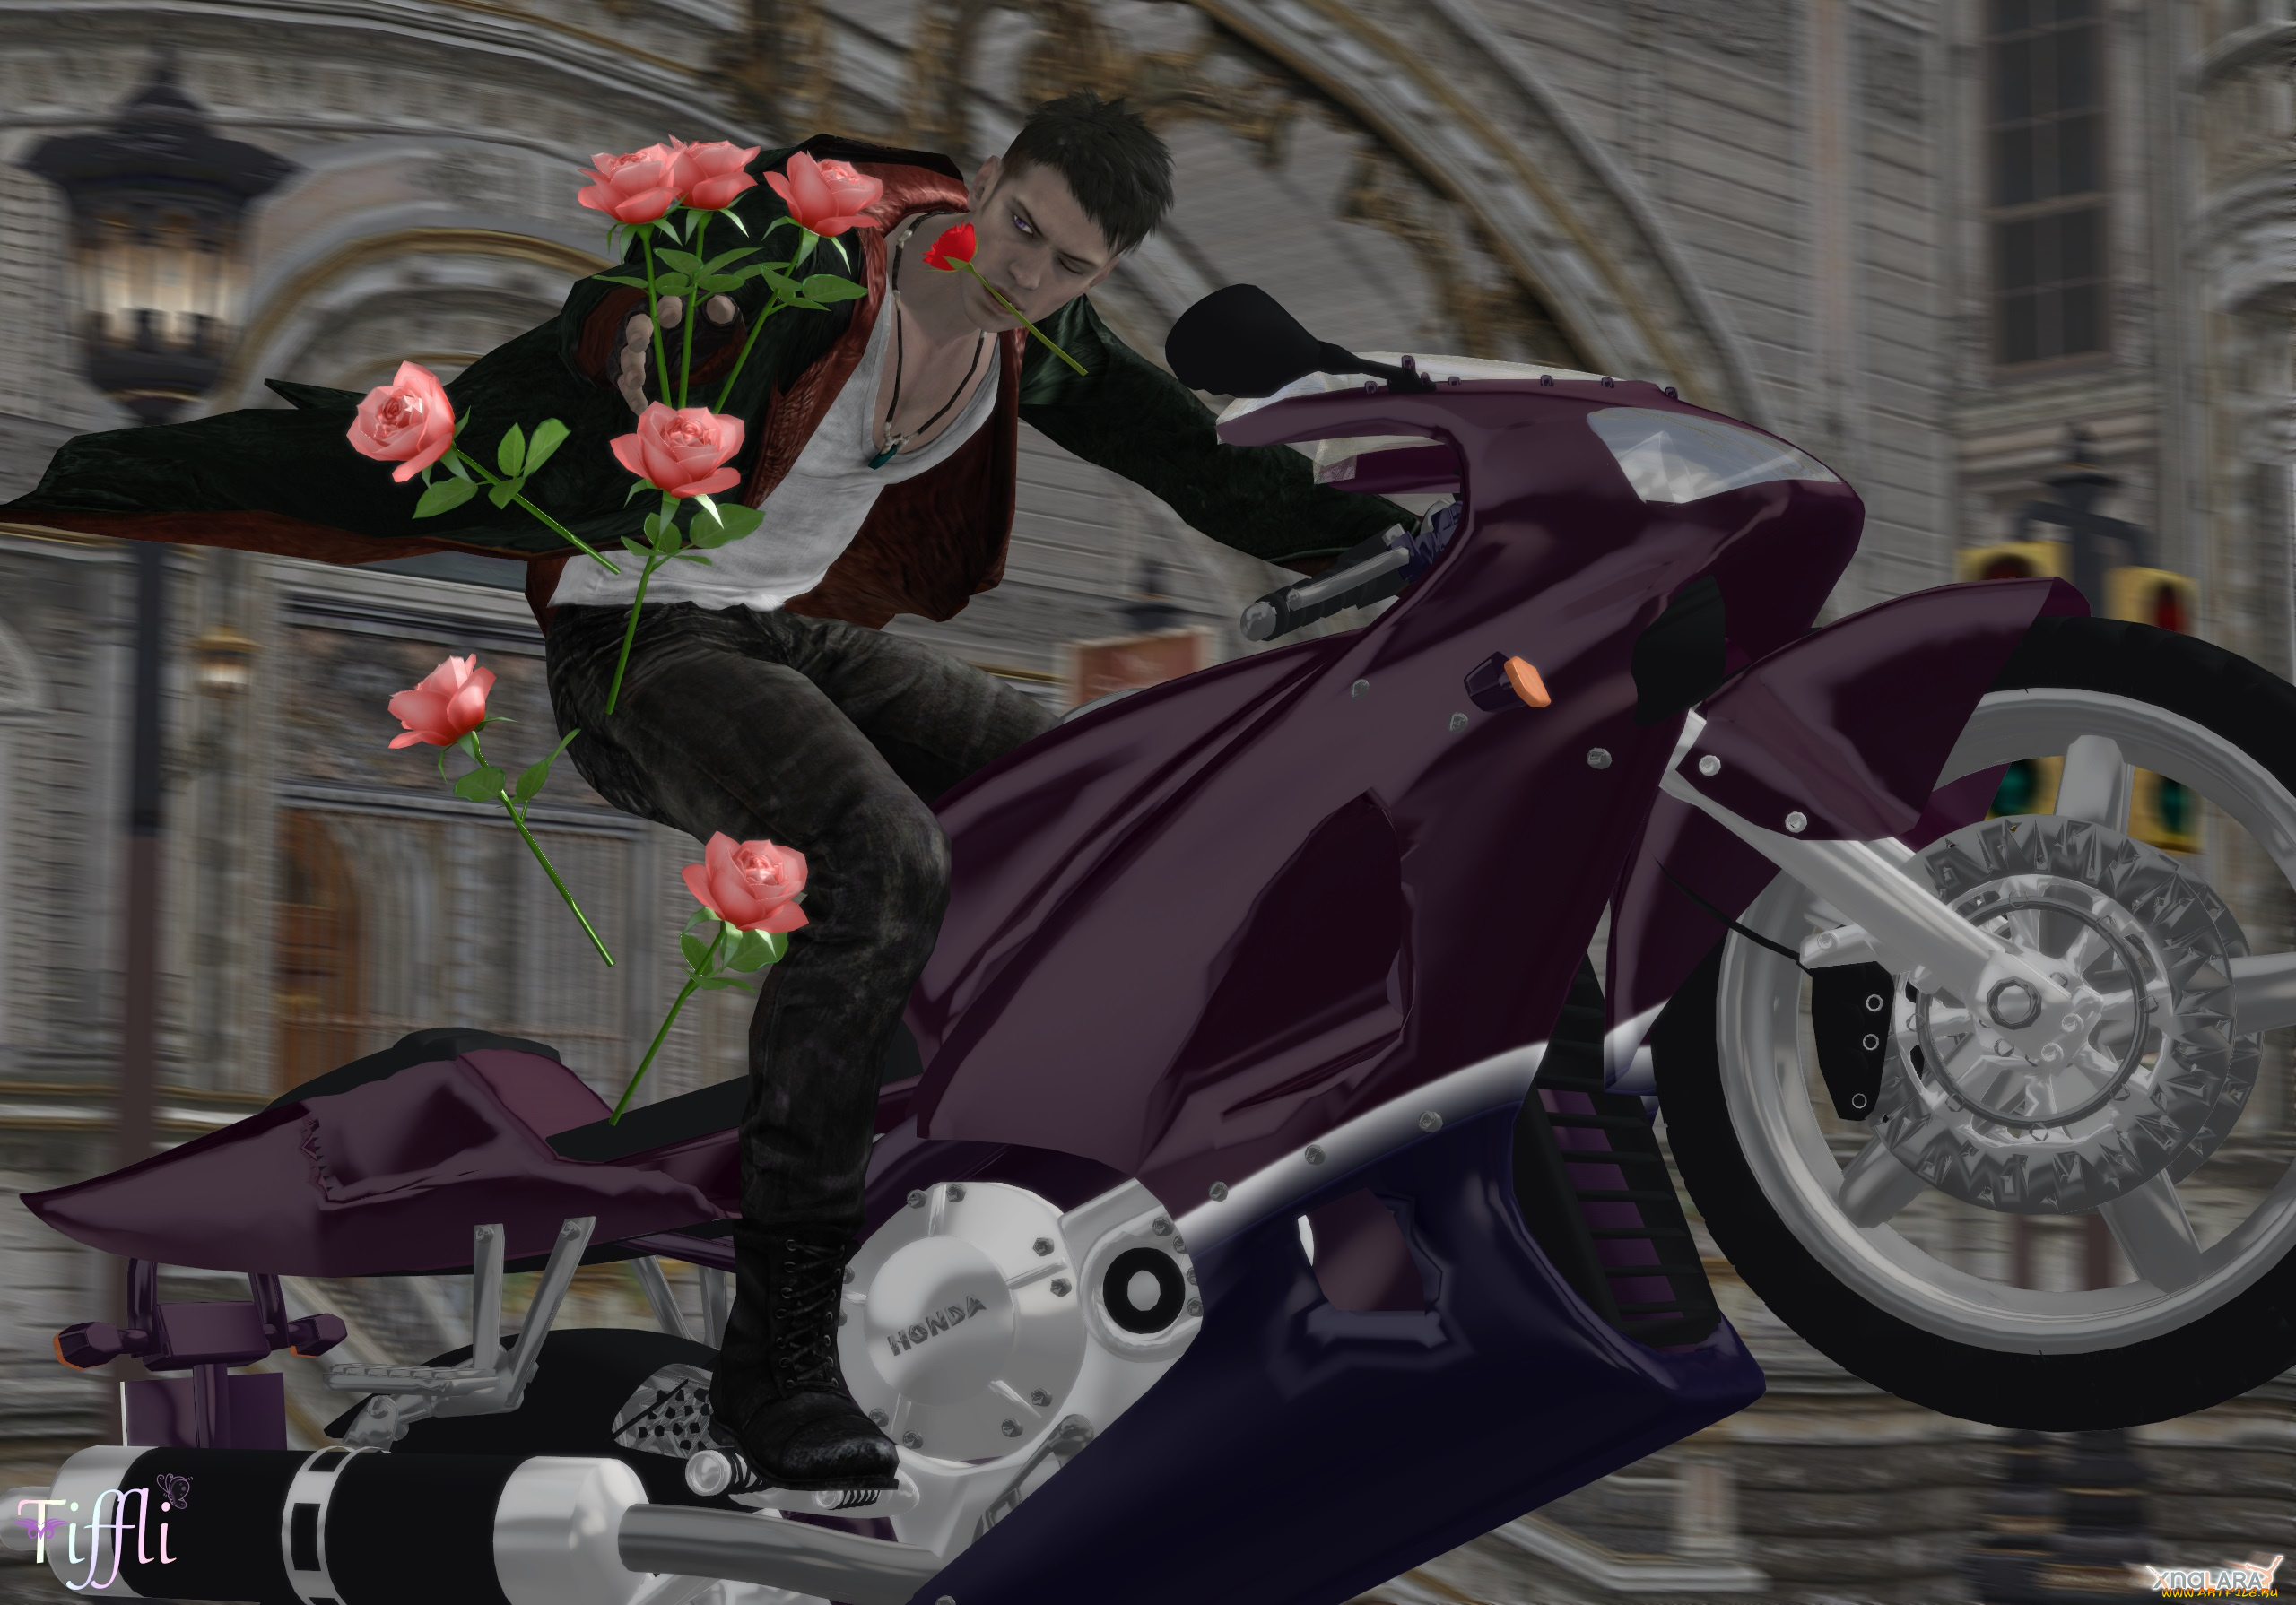 3д, графика, people, люди, мотоцикл, розы, мужчина